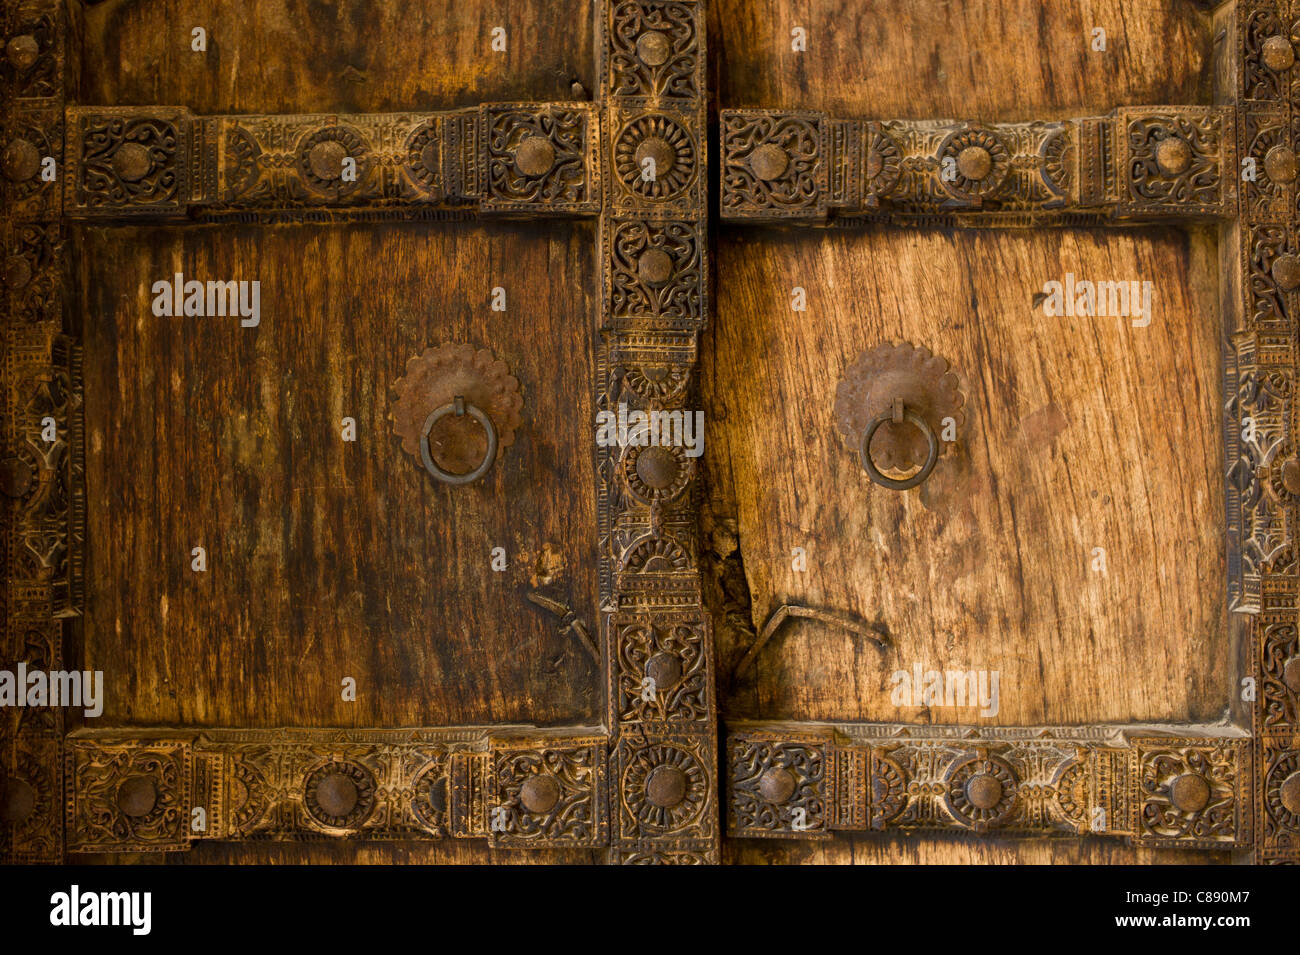 Estilo hindú tradicional puerta en madera de acacia en el siglo XVI Fuerte Amber en Jaipur, en Rajasthan, India Septentrional Foto de stock